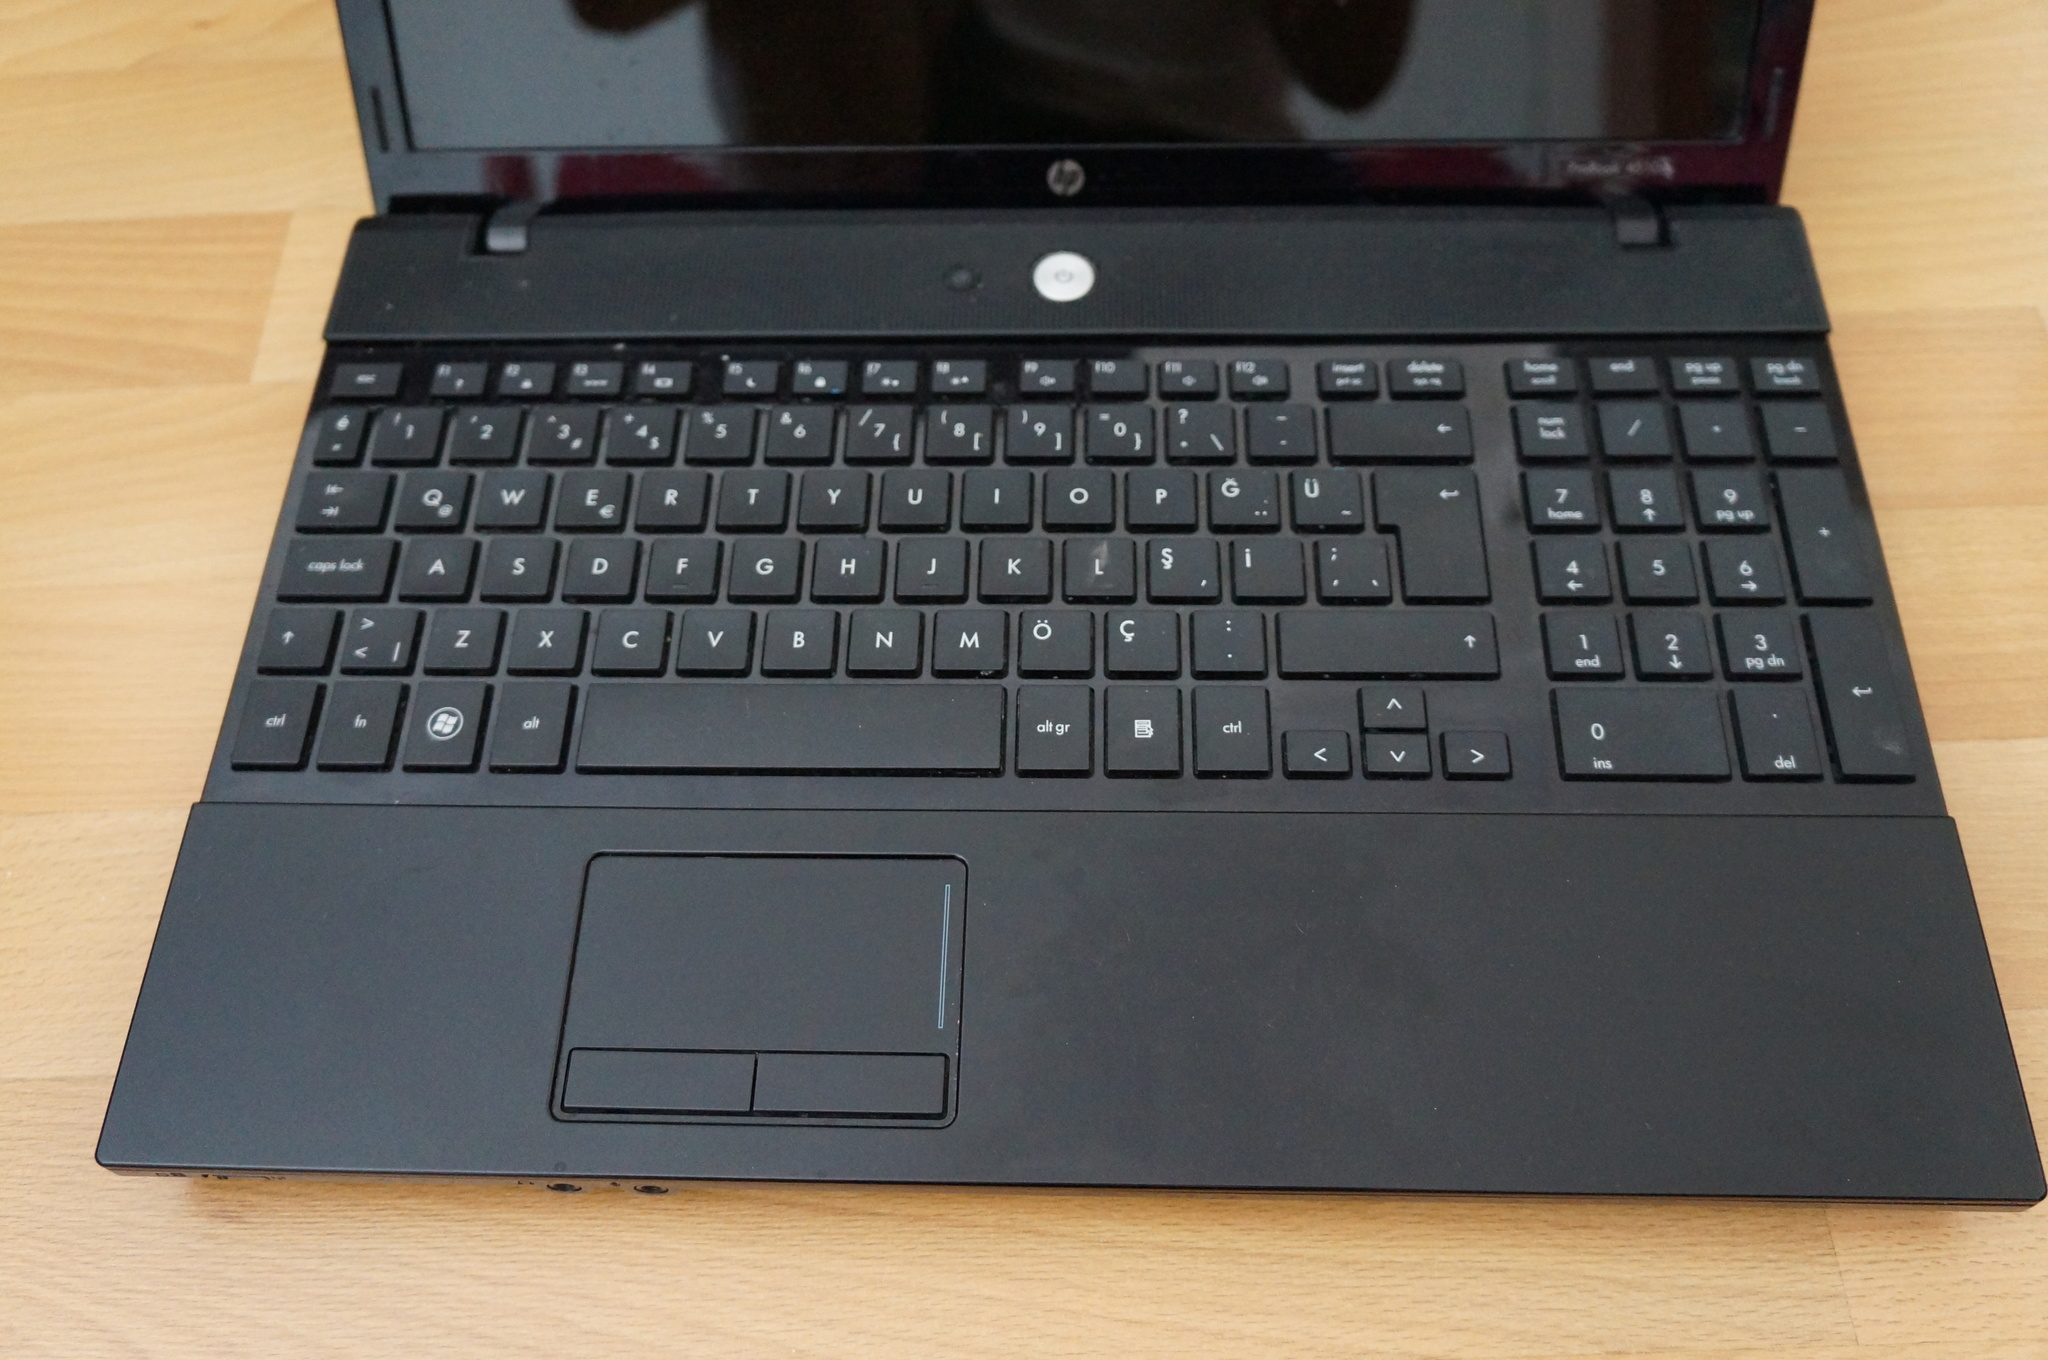  Satılık HP Probook ve Acer Marka 2 Adet Notebook...